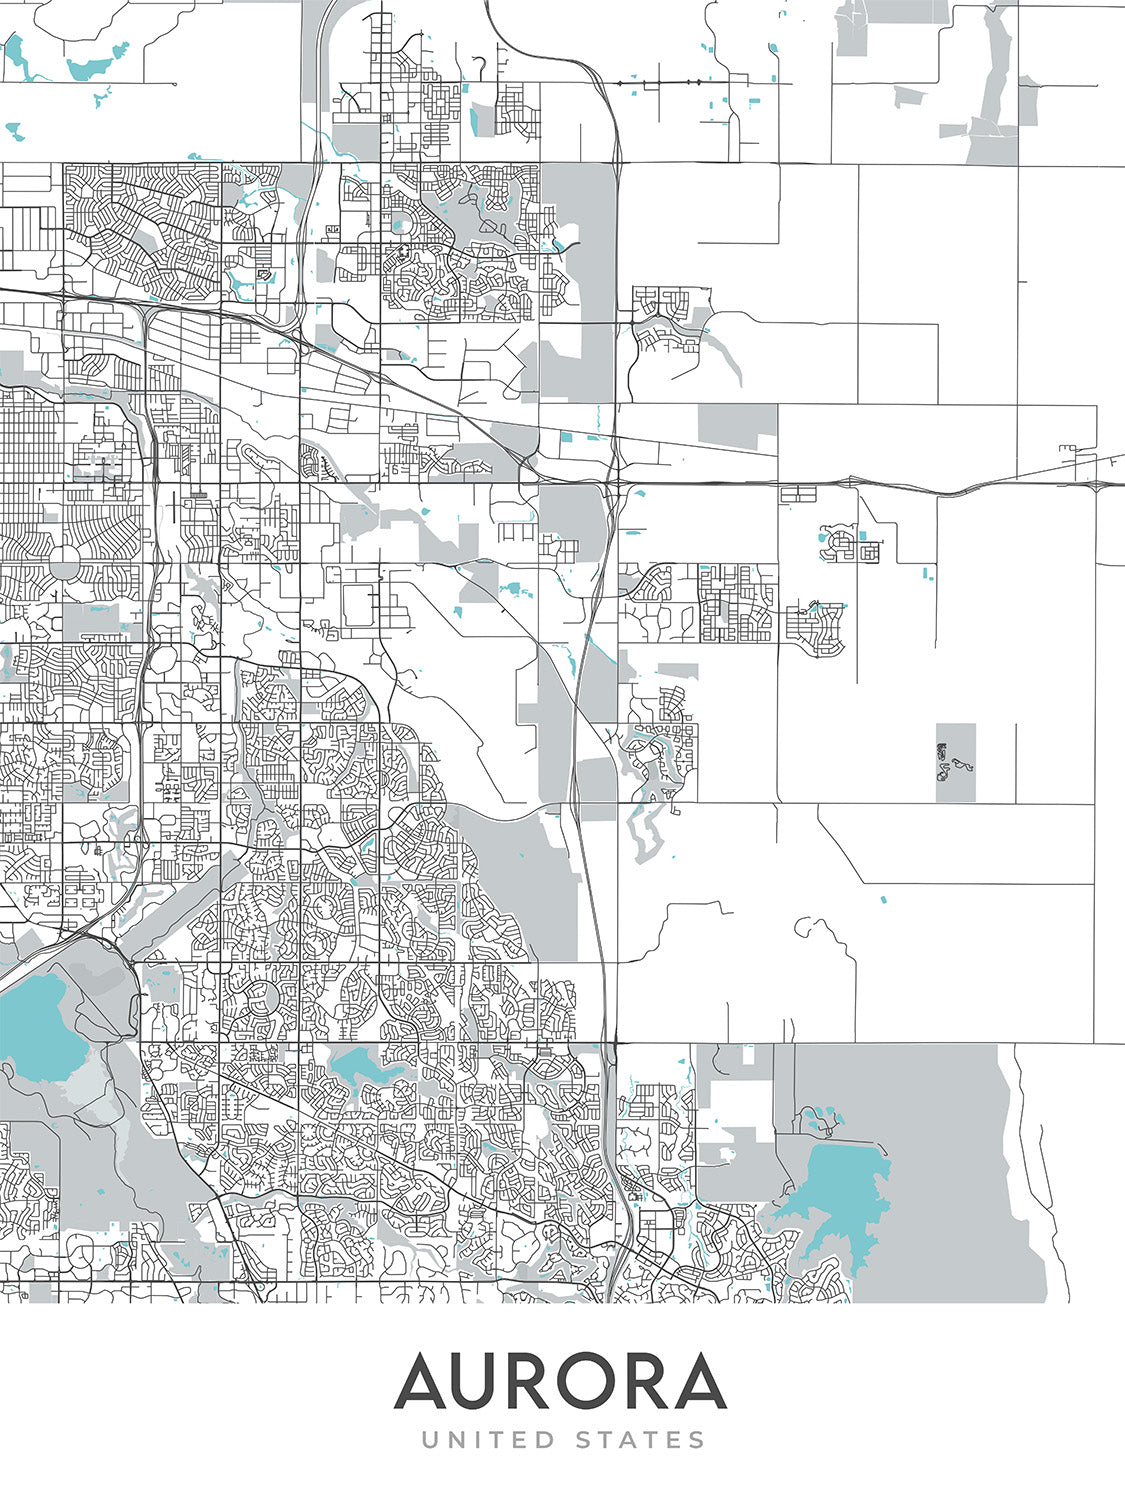 Modern City Map of Aurora, CO: Aurora Hills, Cherry Creek, Fitzsimons, I-225, Buckley AFB